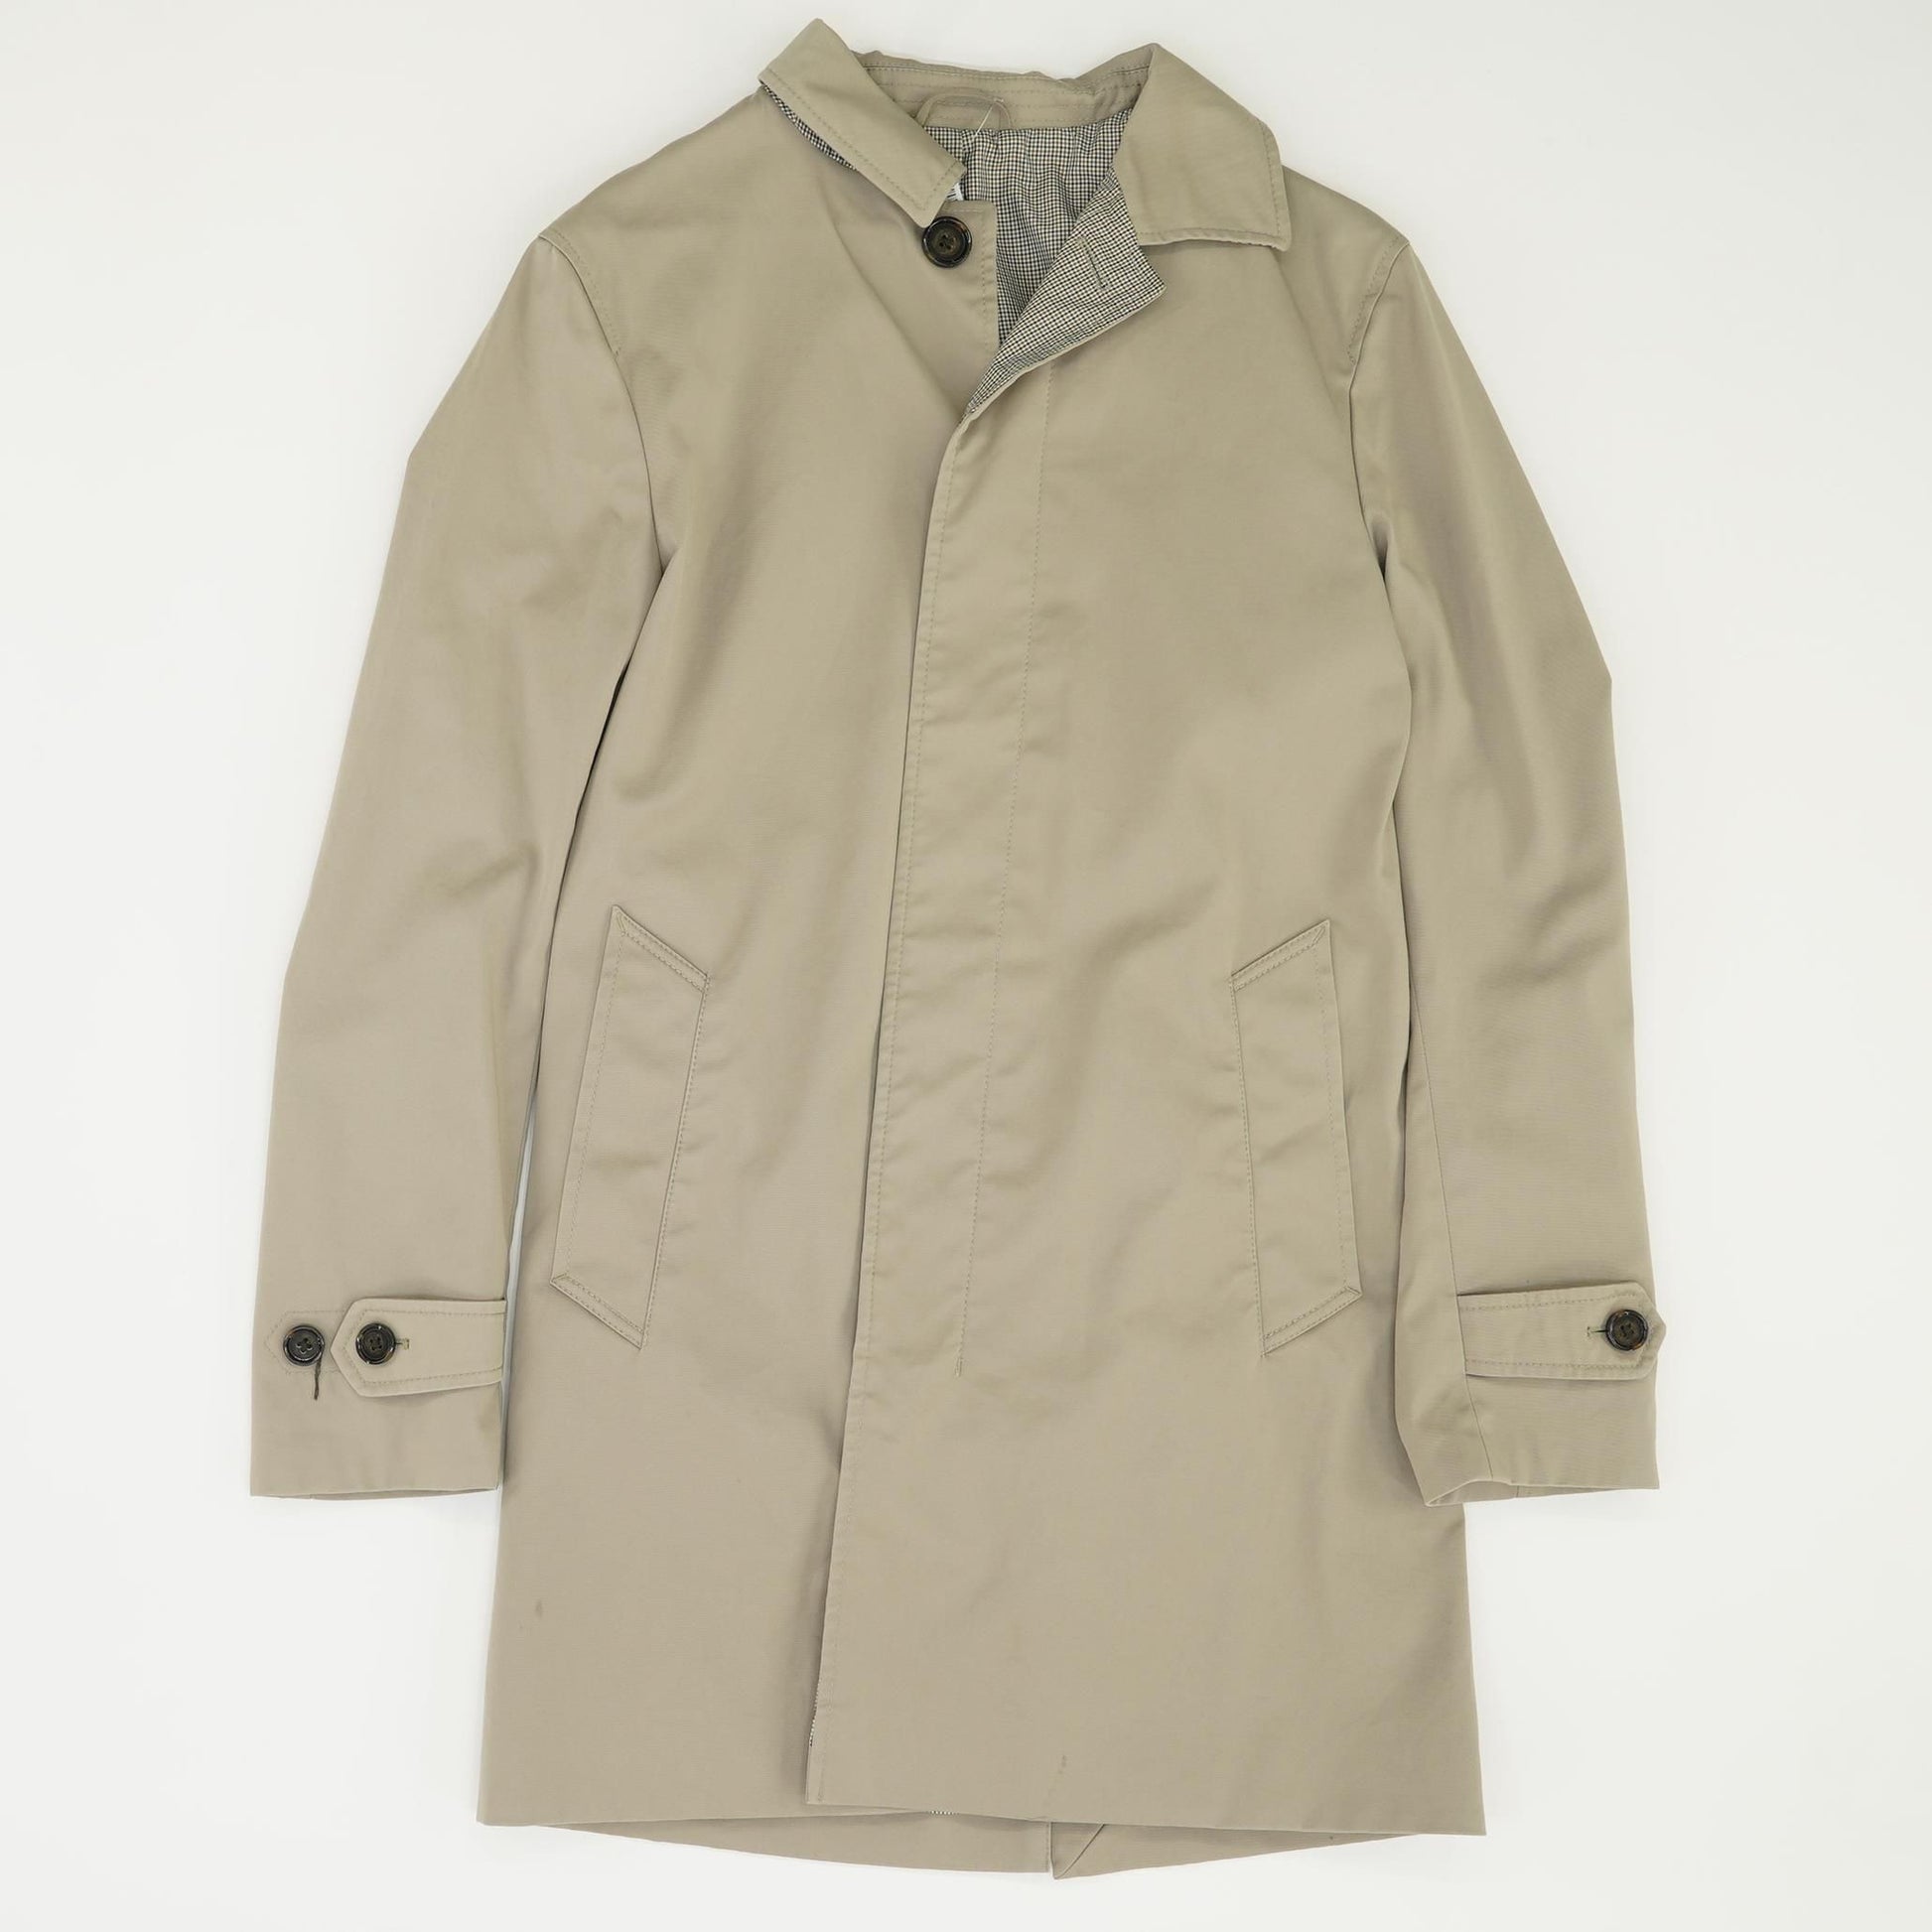 lv jacket price, Off 72%